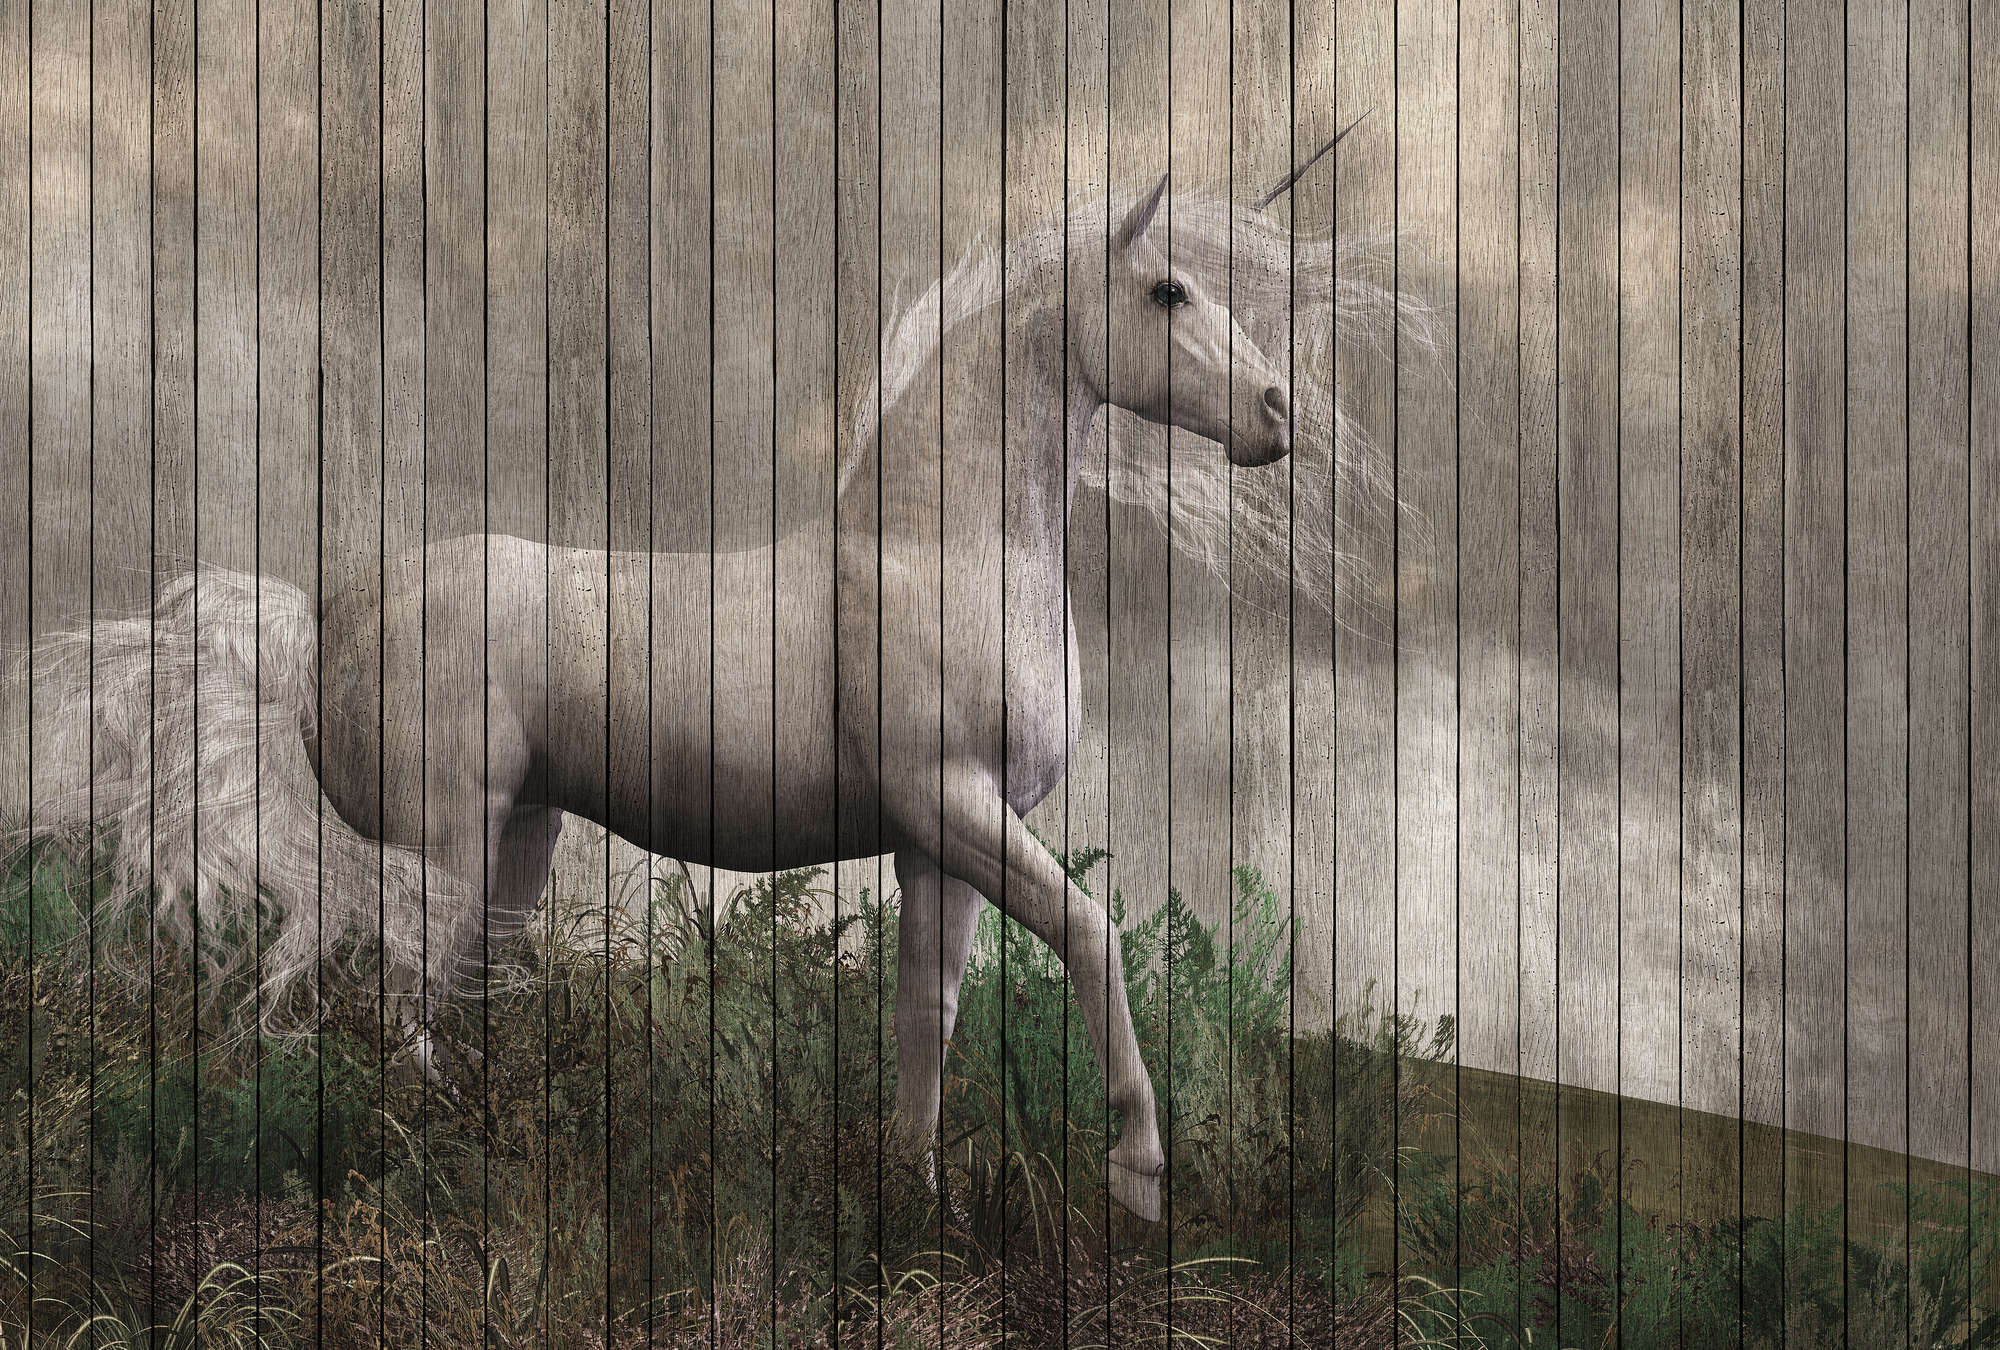             Fantasy 3 - Unicorn Wallpaper with Wooden Board Optics - Beige, Brown | Pearl Smooth Non-woven
        